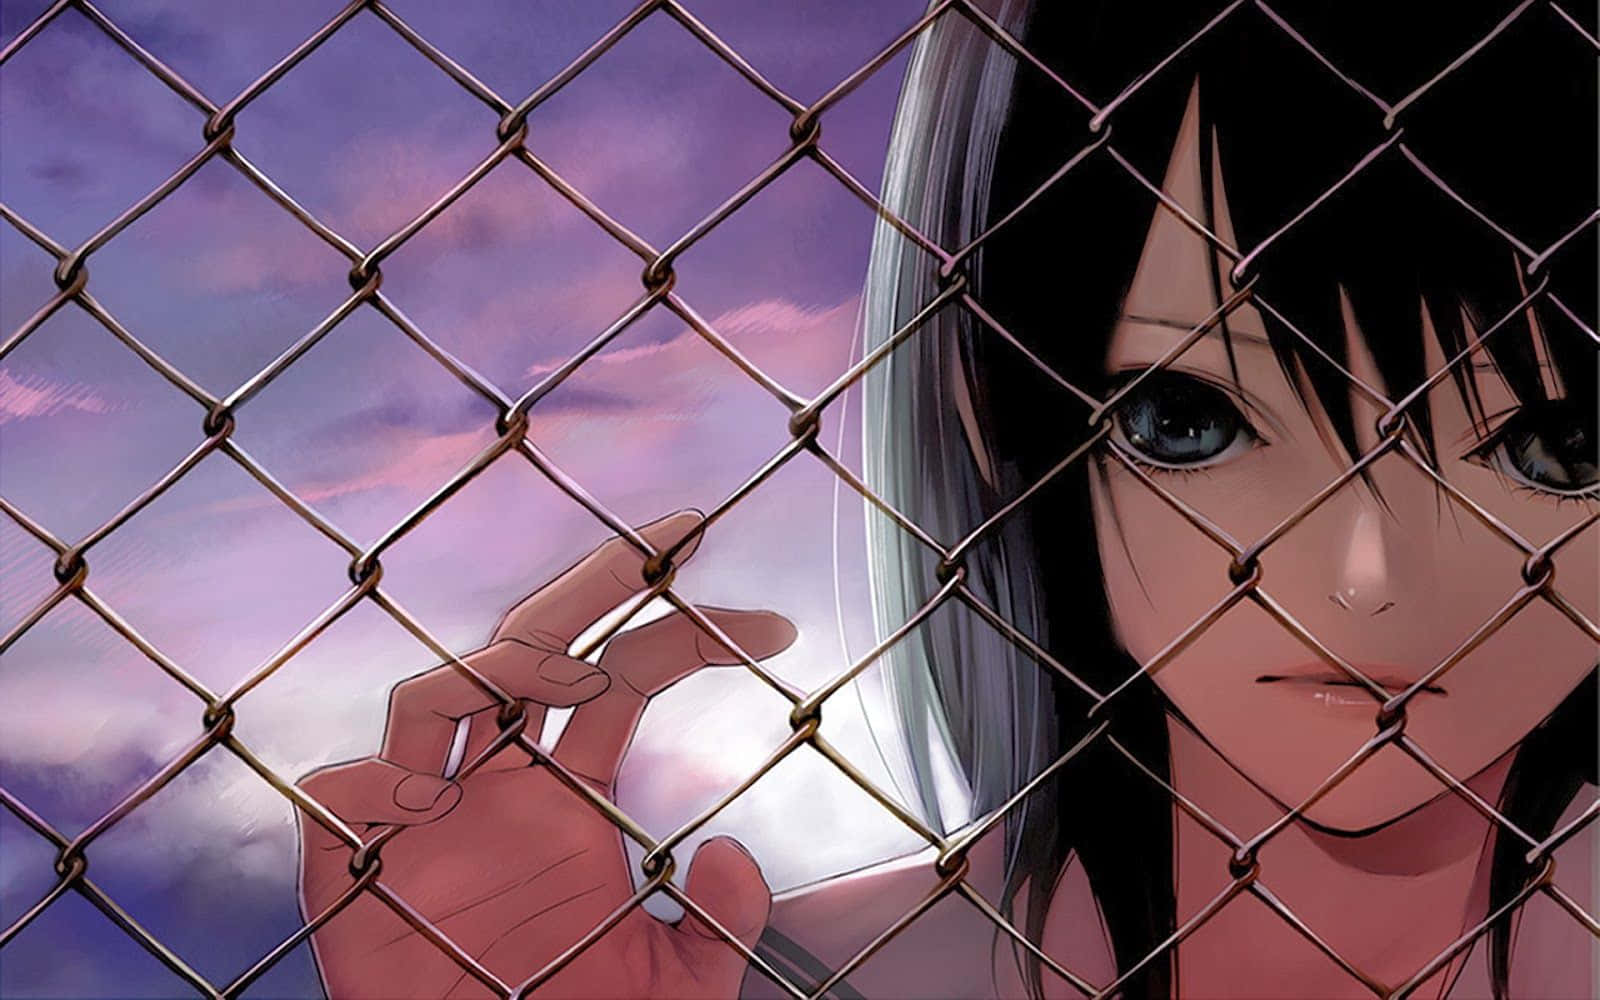 Free Anime Girl Aesthetic Wallpaper Downloads, Anime Girl Aesthetic Wallpaper for FREE